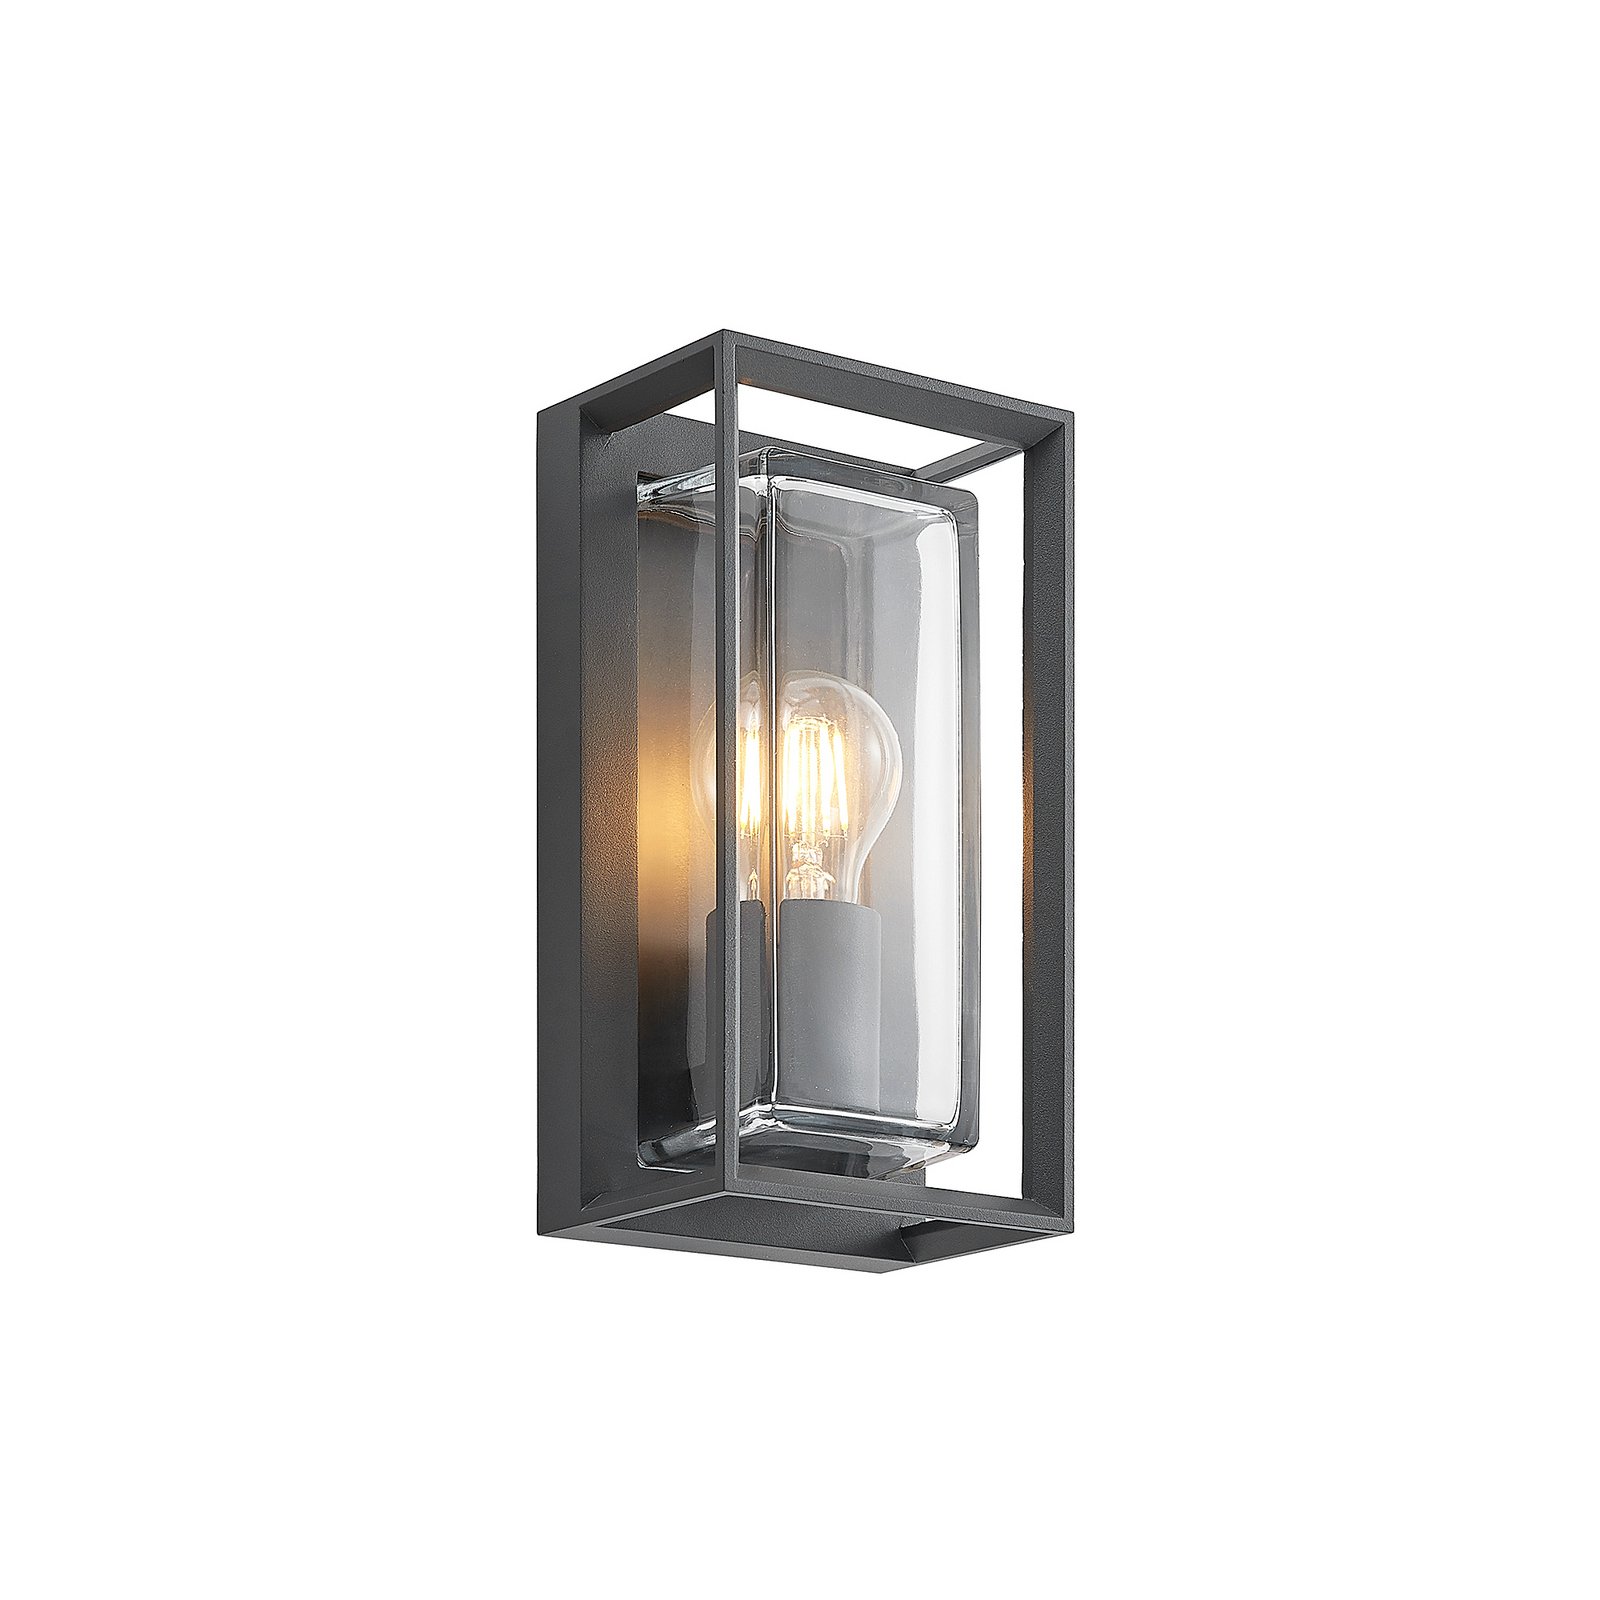 Arcchio outdoor wall light Ismera, IP65, glass, dark grey, E27